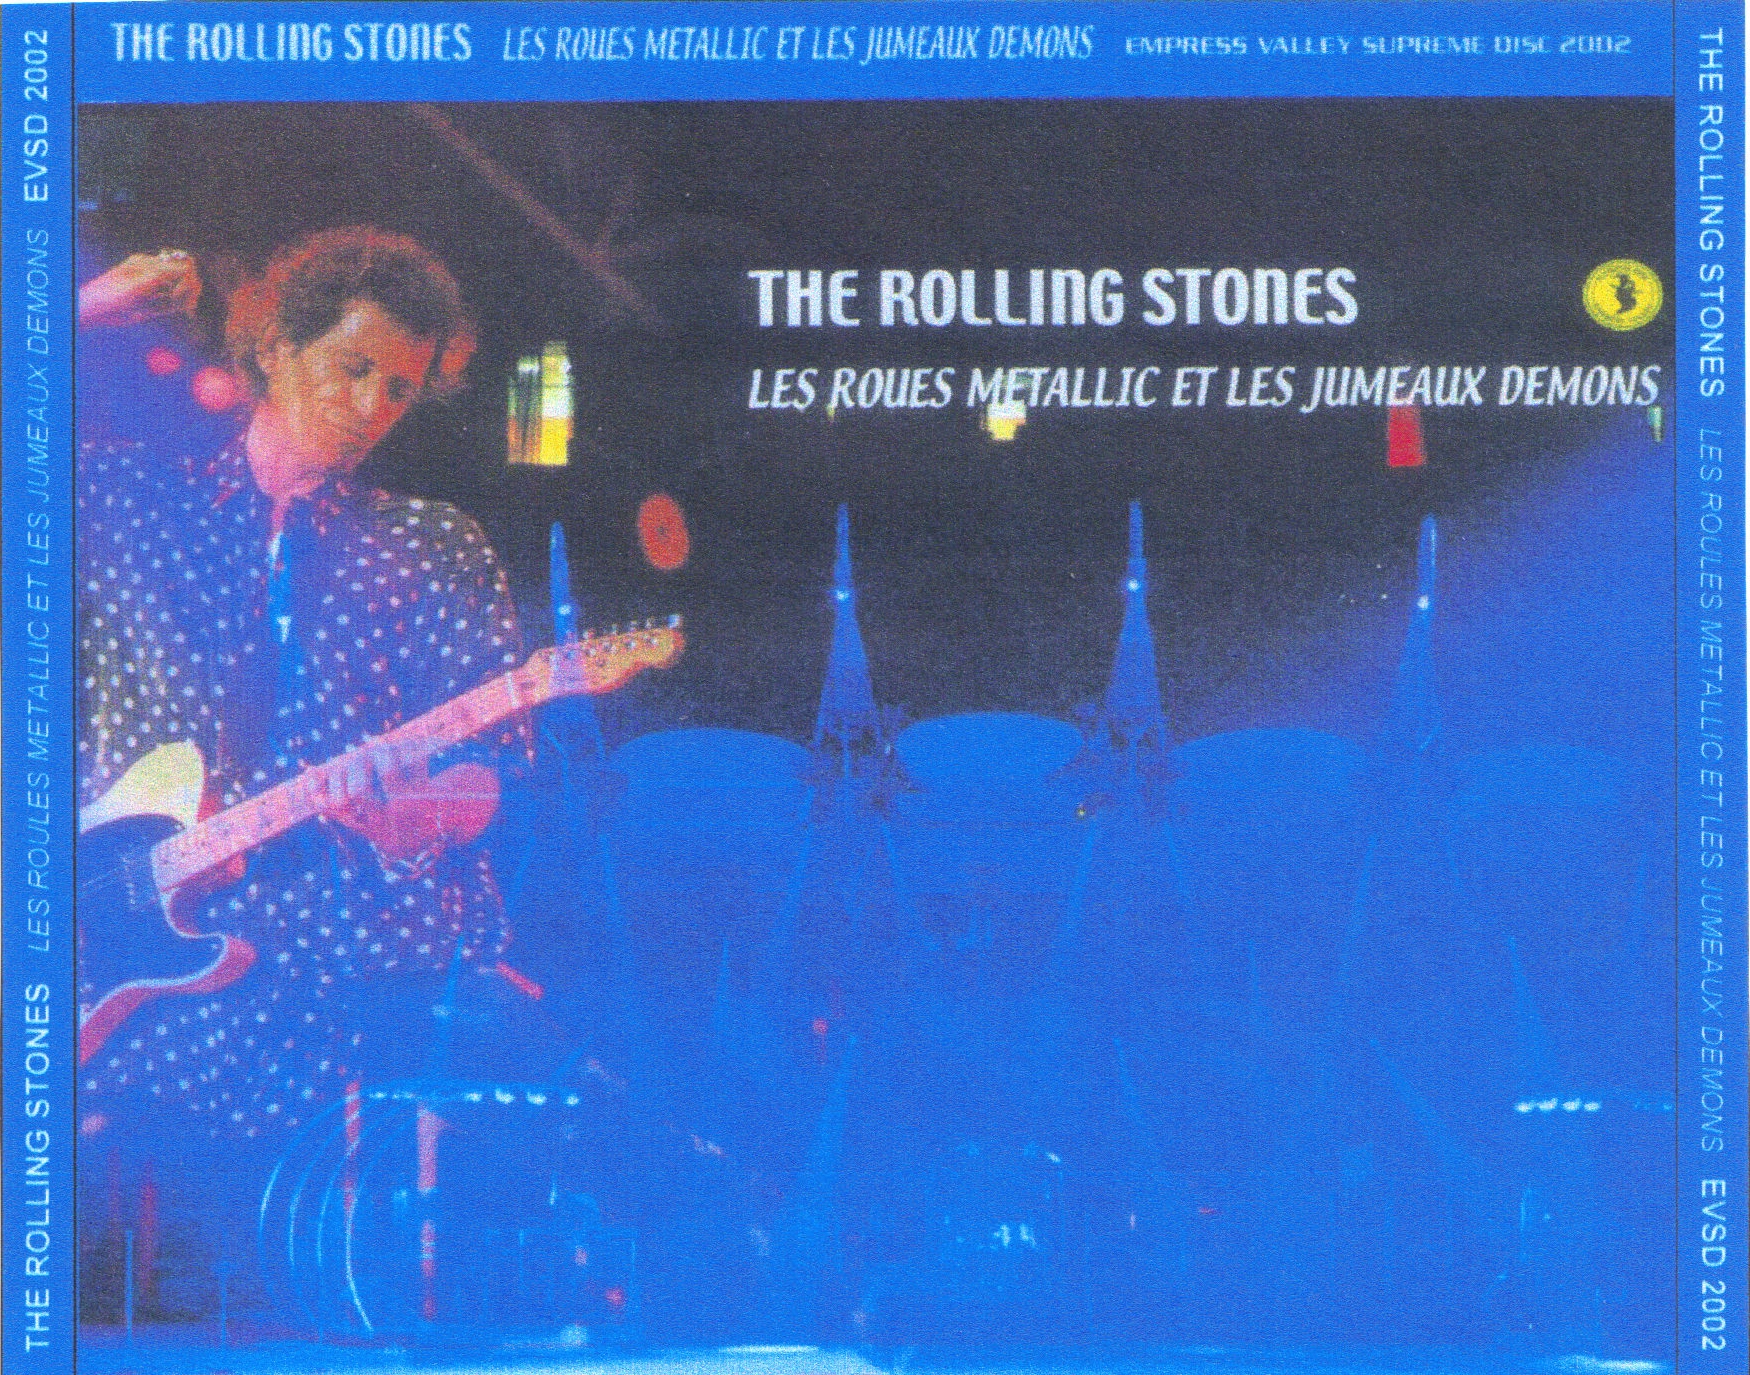 RollingStones1989-12-14OlympicStadiumMontrealCanada (1).jpg